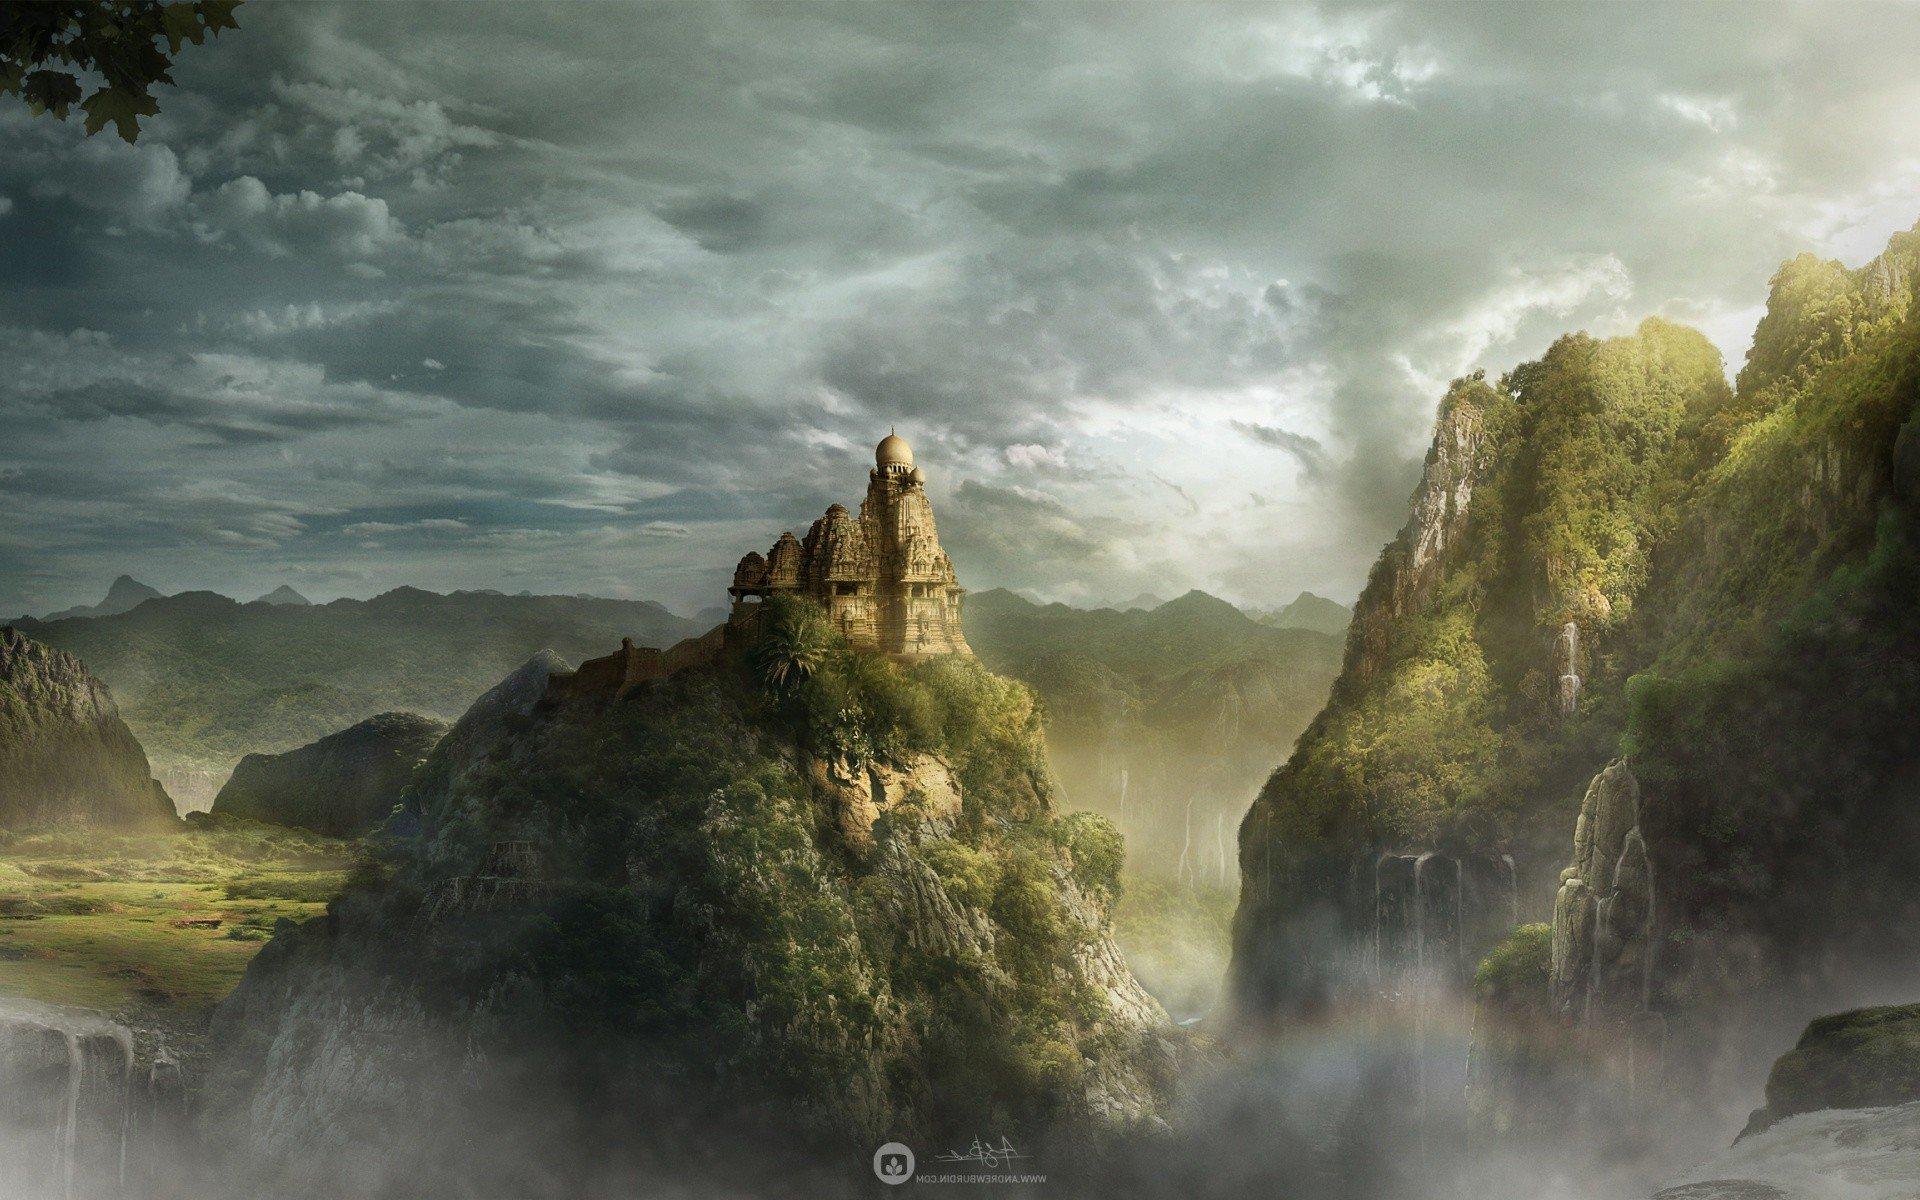 Mountain Kingdom, HD Creative, 4k Wallpaper, Image, Background